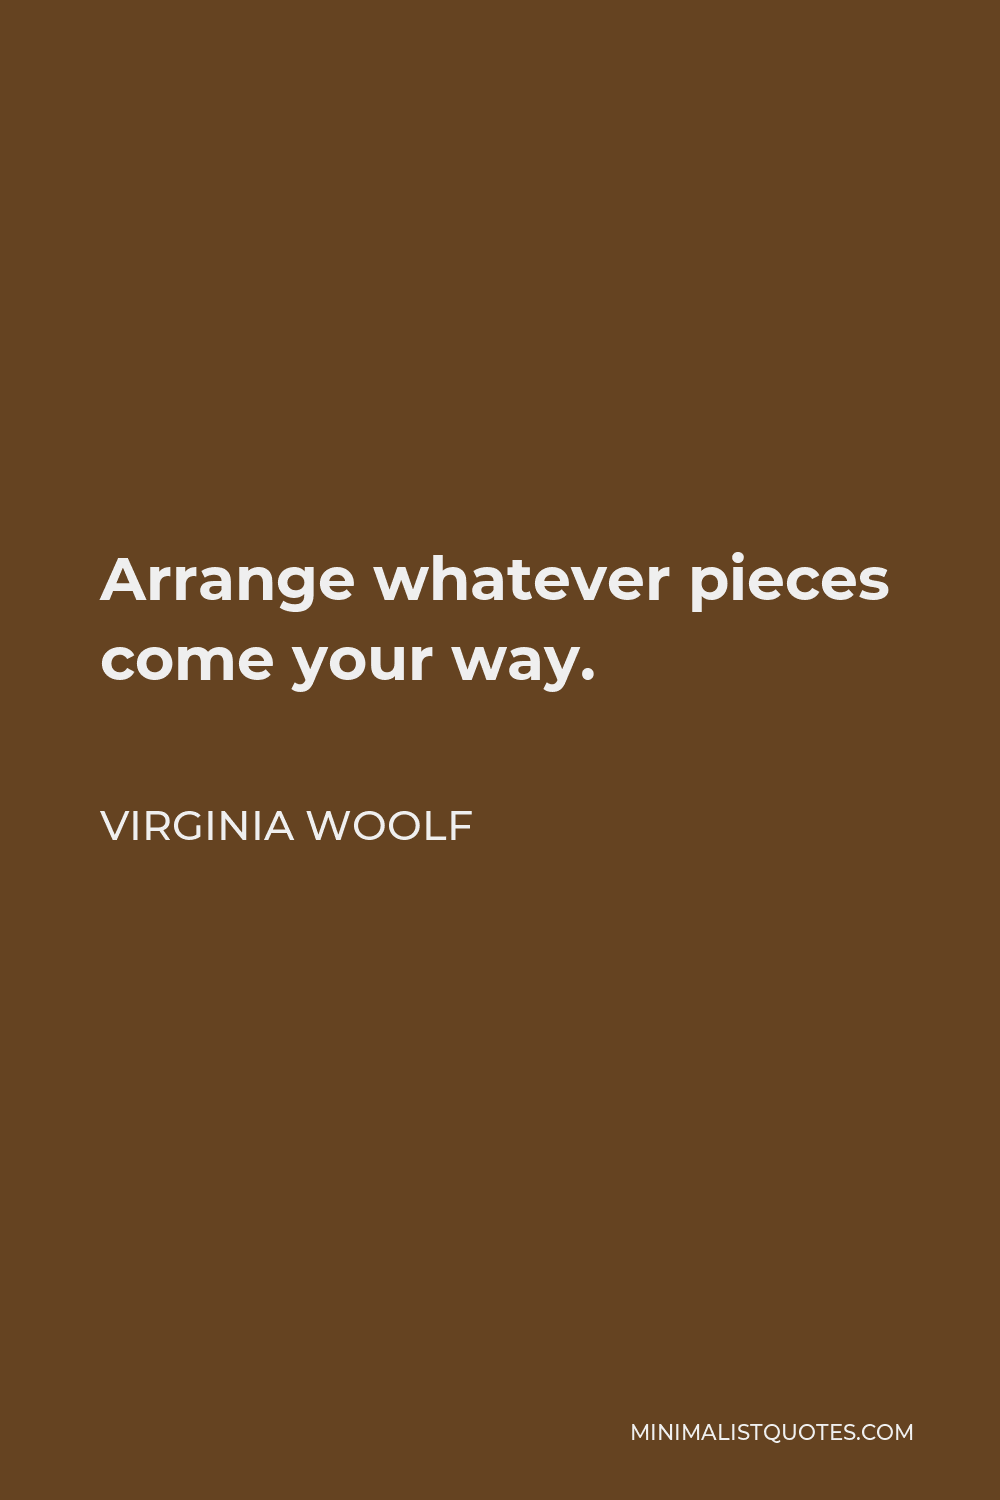 Virginia Woolf Quote - Arrange whatever pieces come your way.